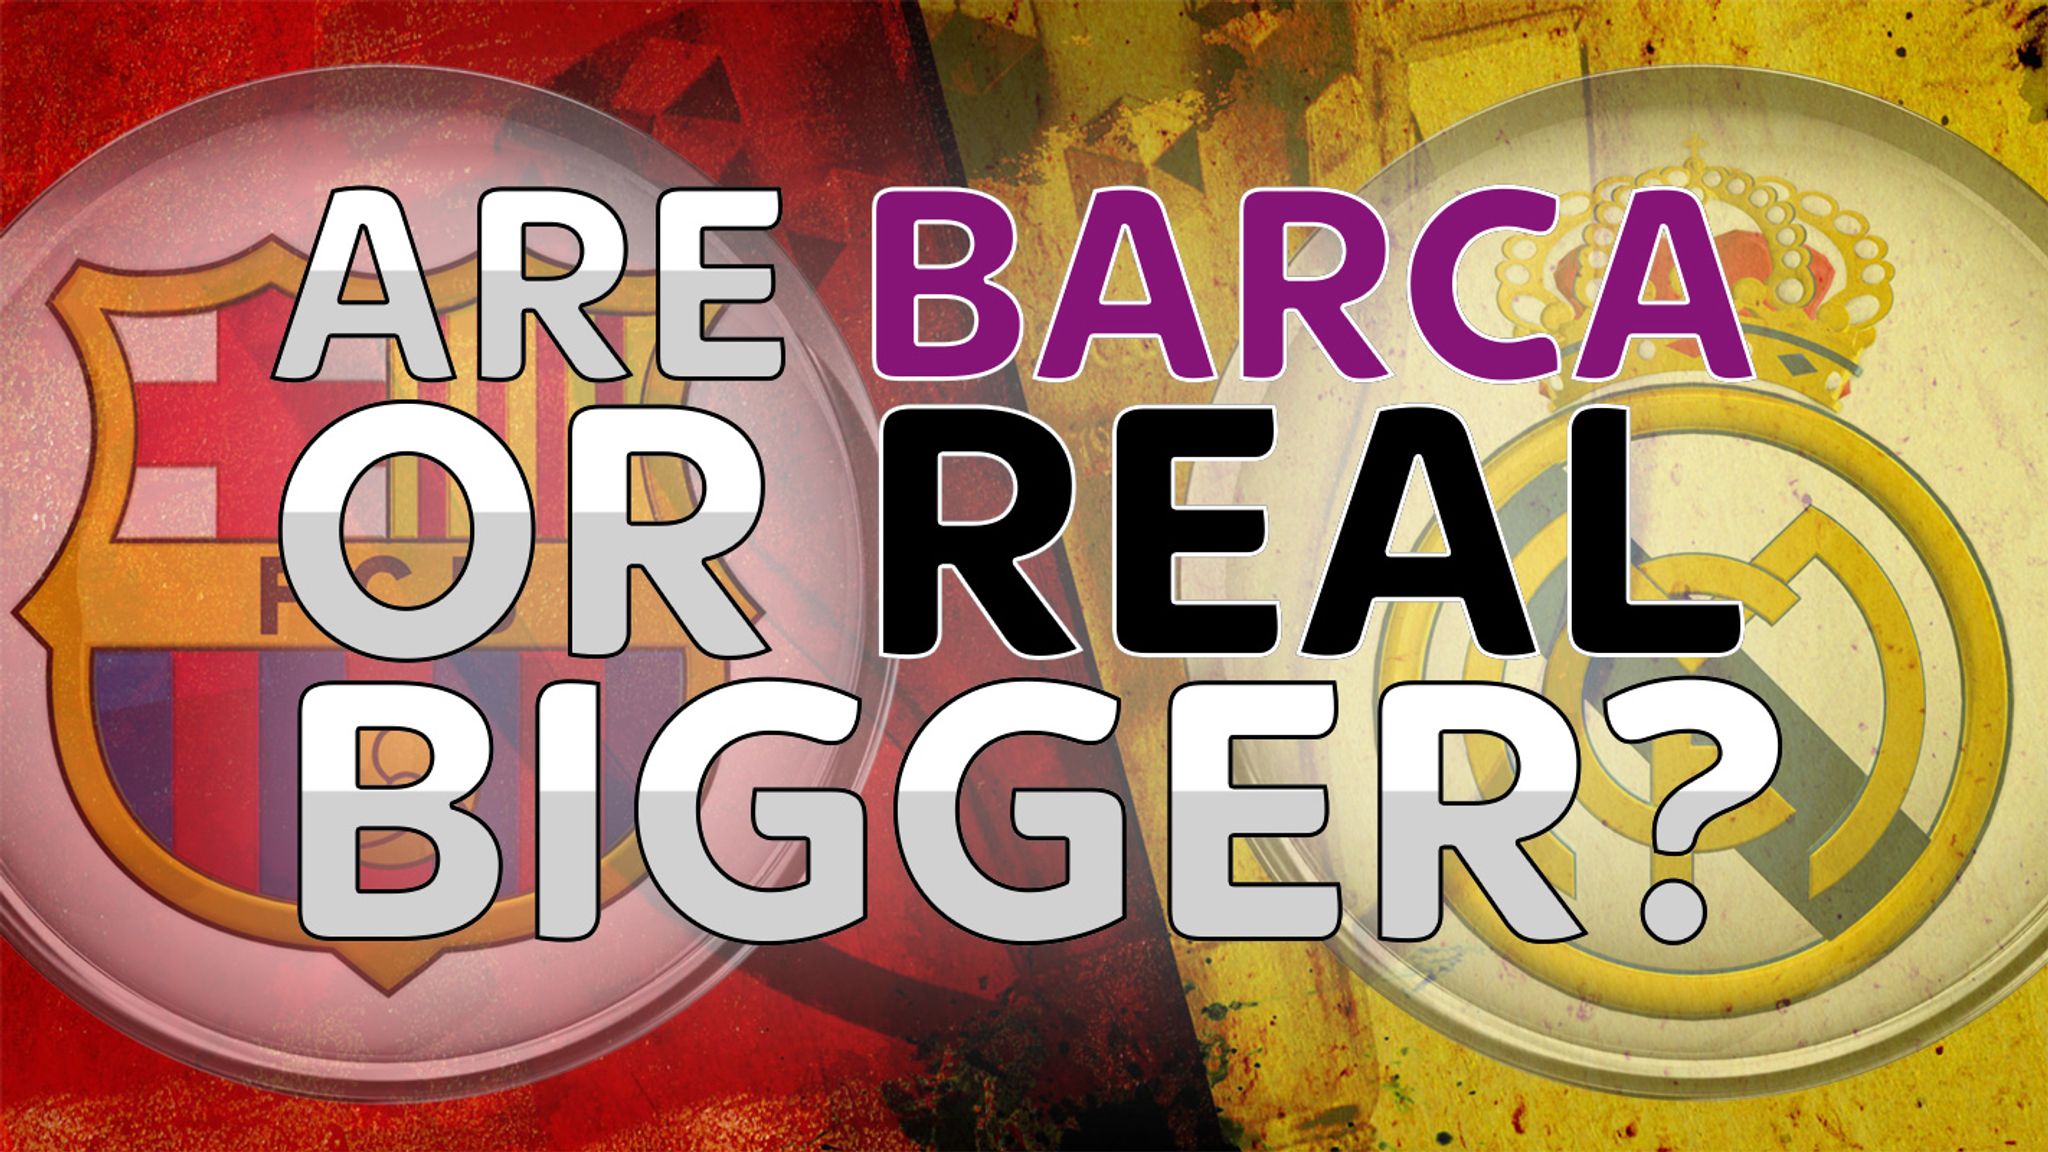 Who's La Liga's biggest club outside Barcelona, Real Madrid and Atlético?